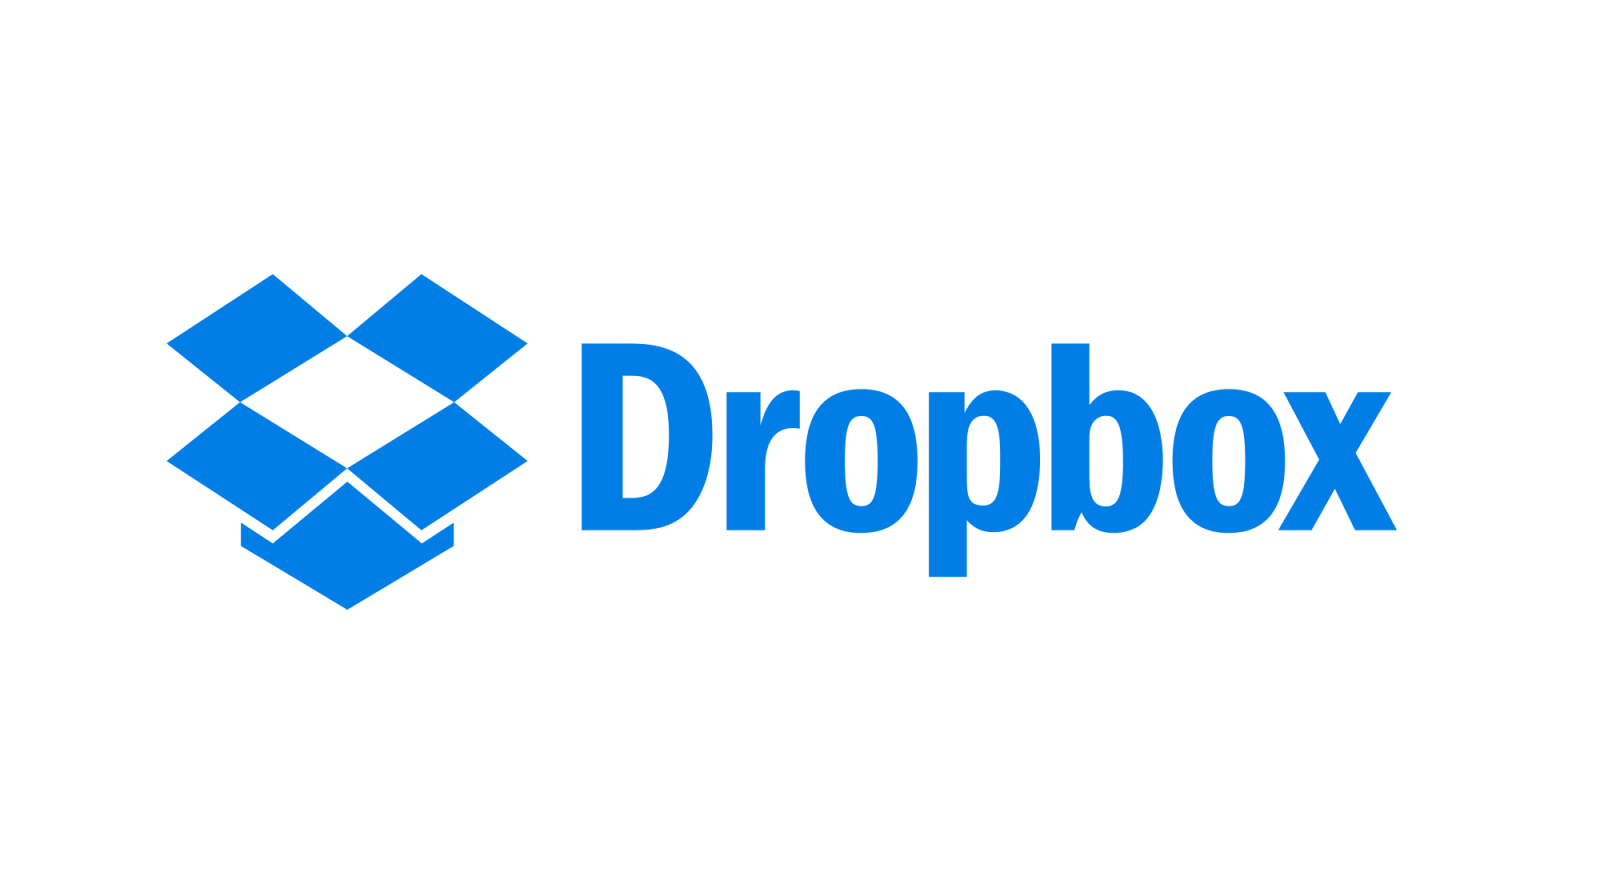 dropbox_logo.png